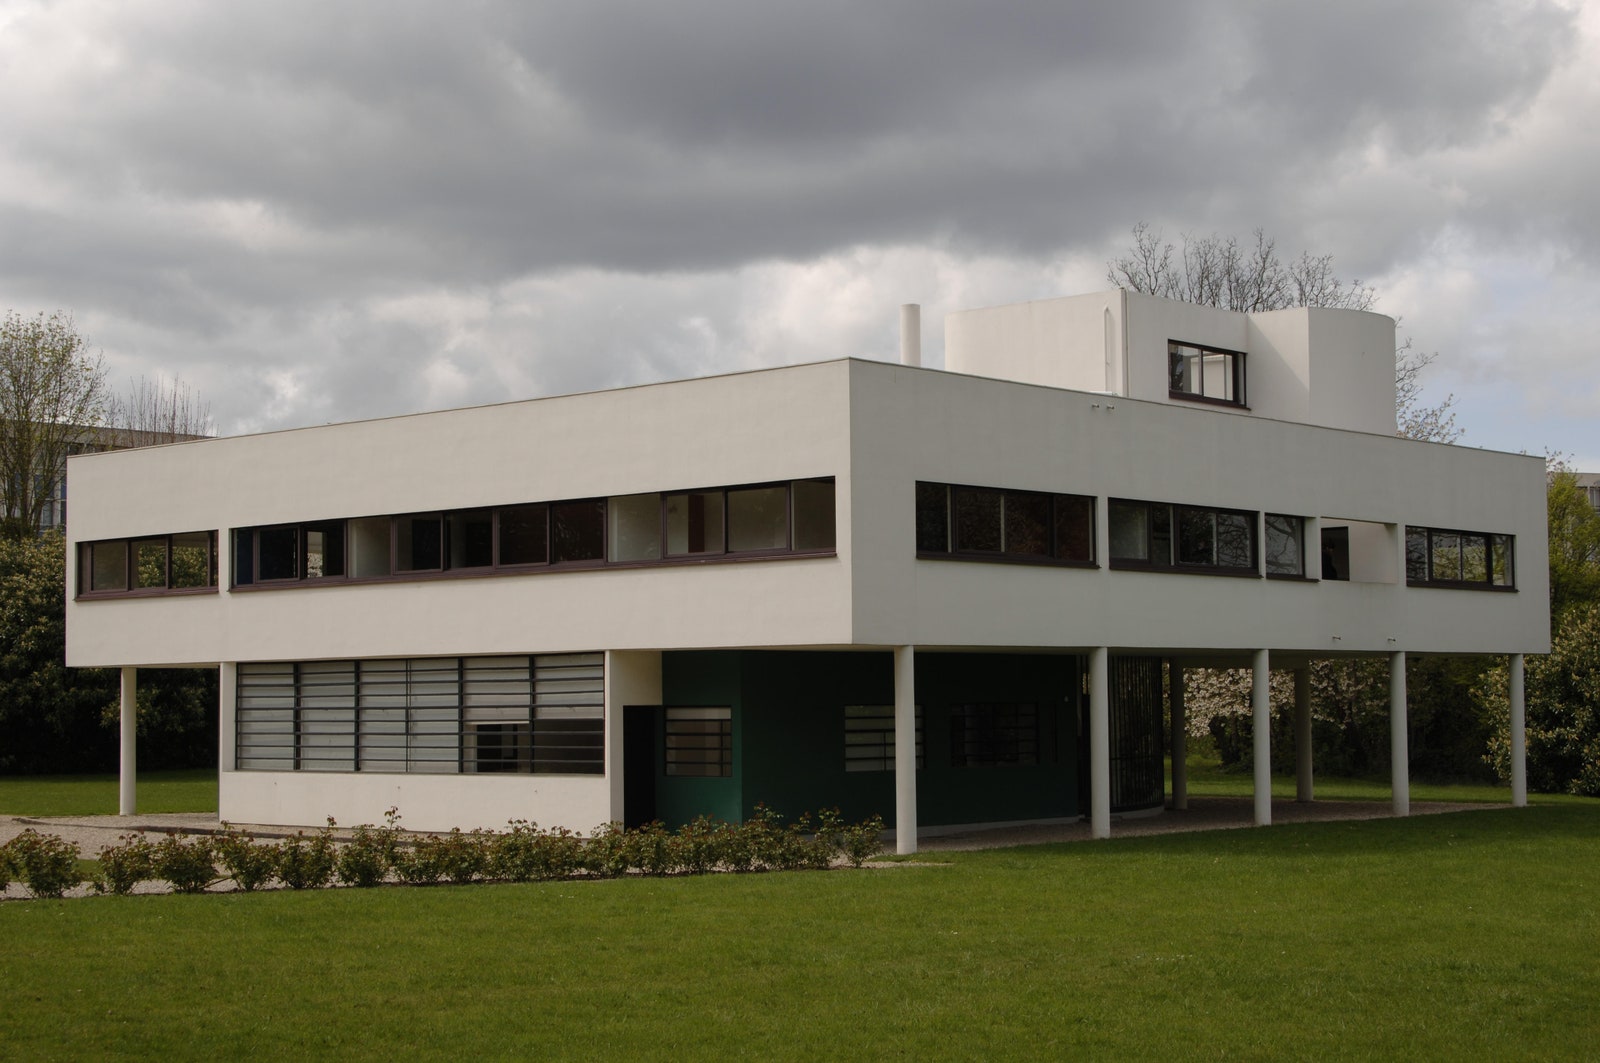 Villa Savoye. Designed by Swiss architects Le Corbusier